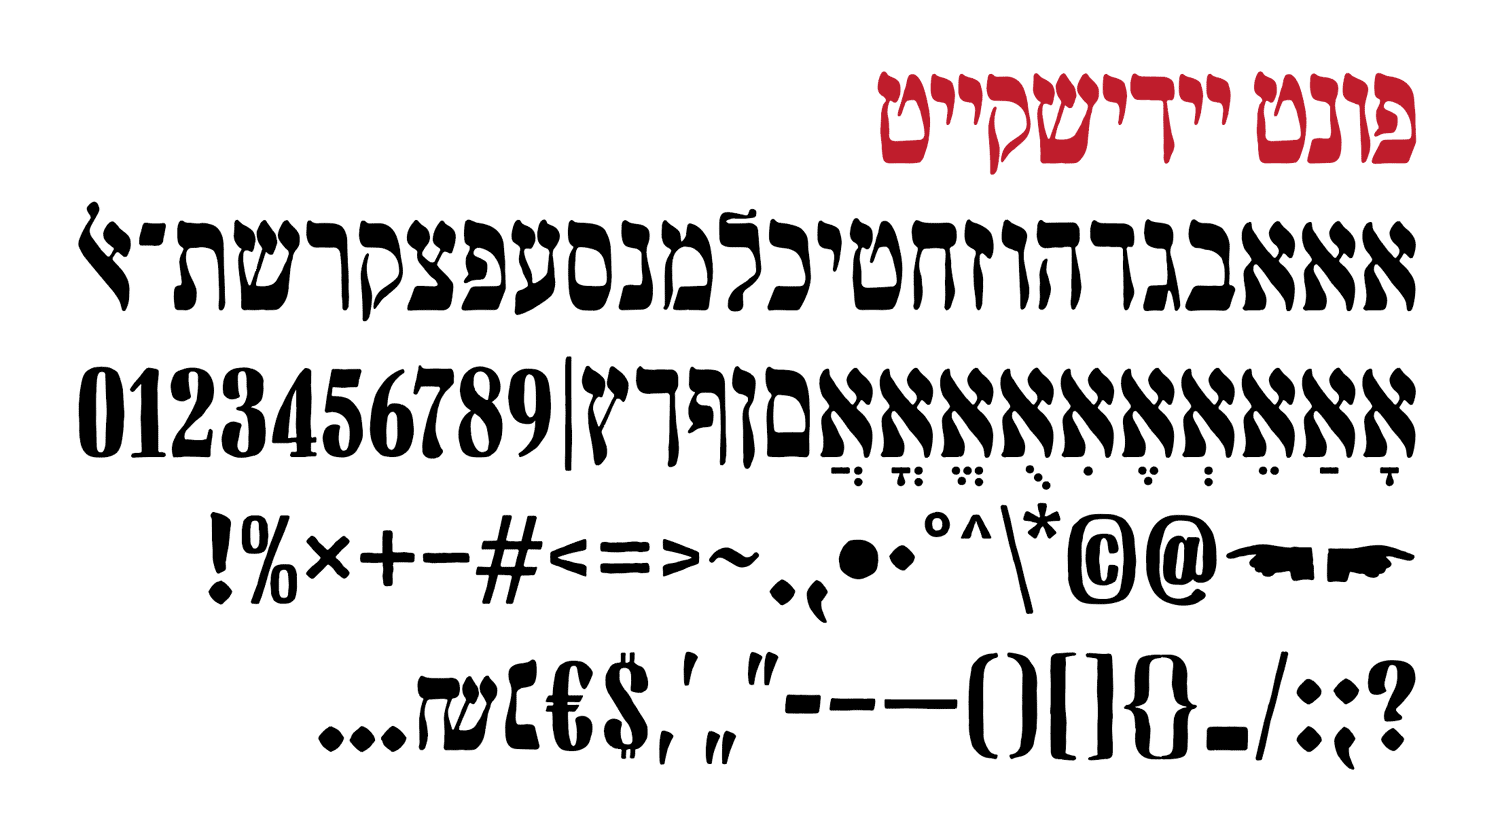 Yiddishkeit Alef Alef Alef